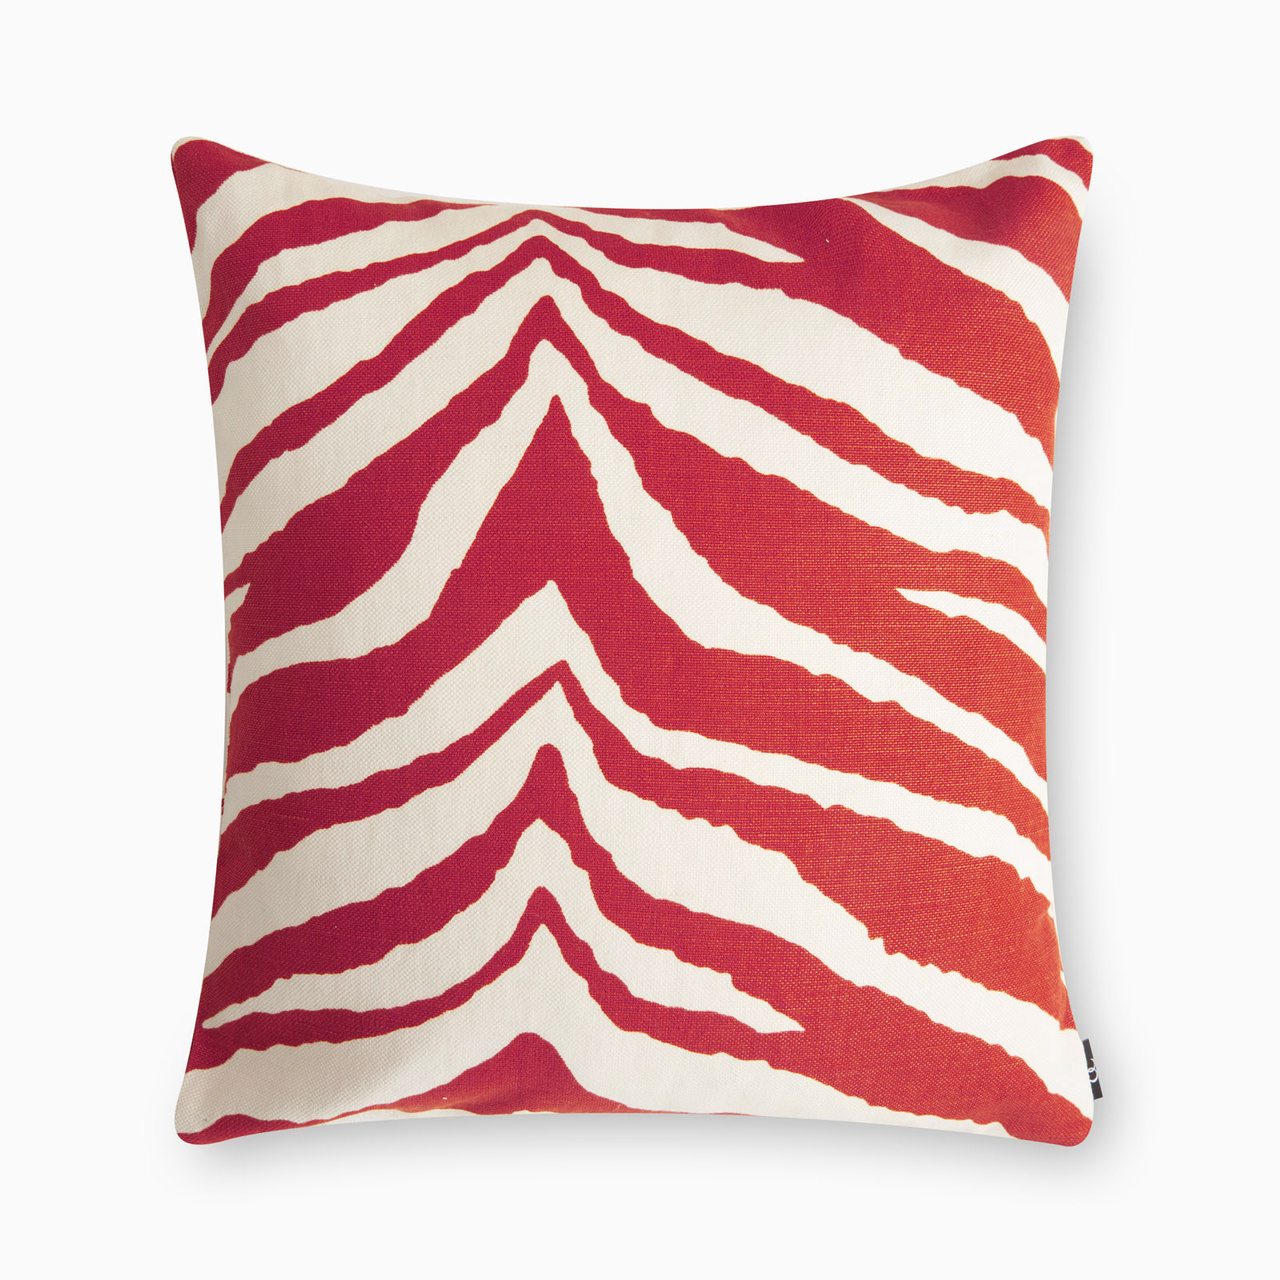 Kuddfodral Zebra 50x50 röd